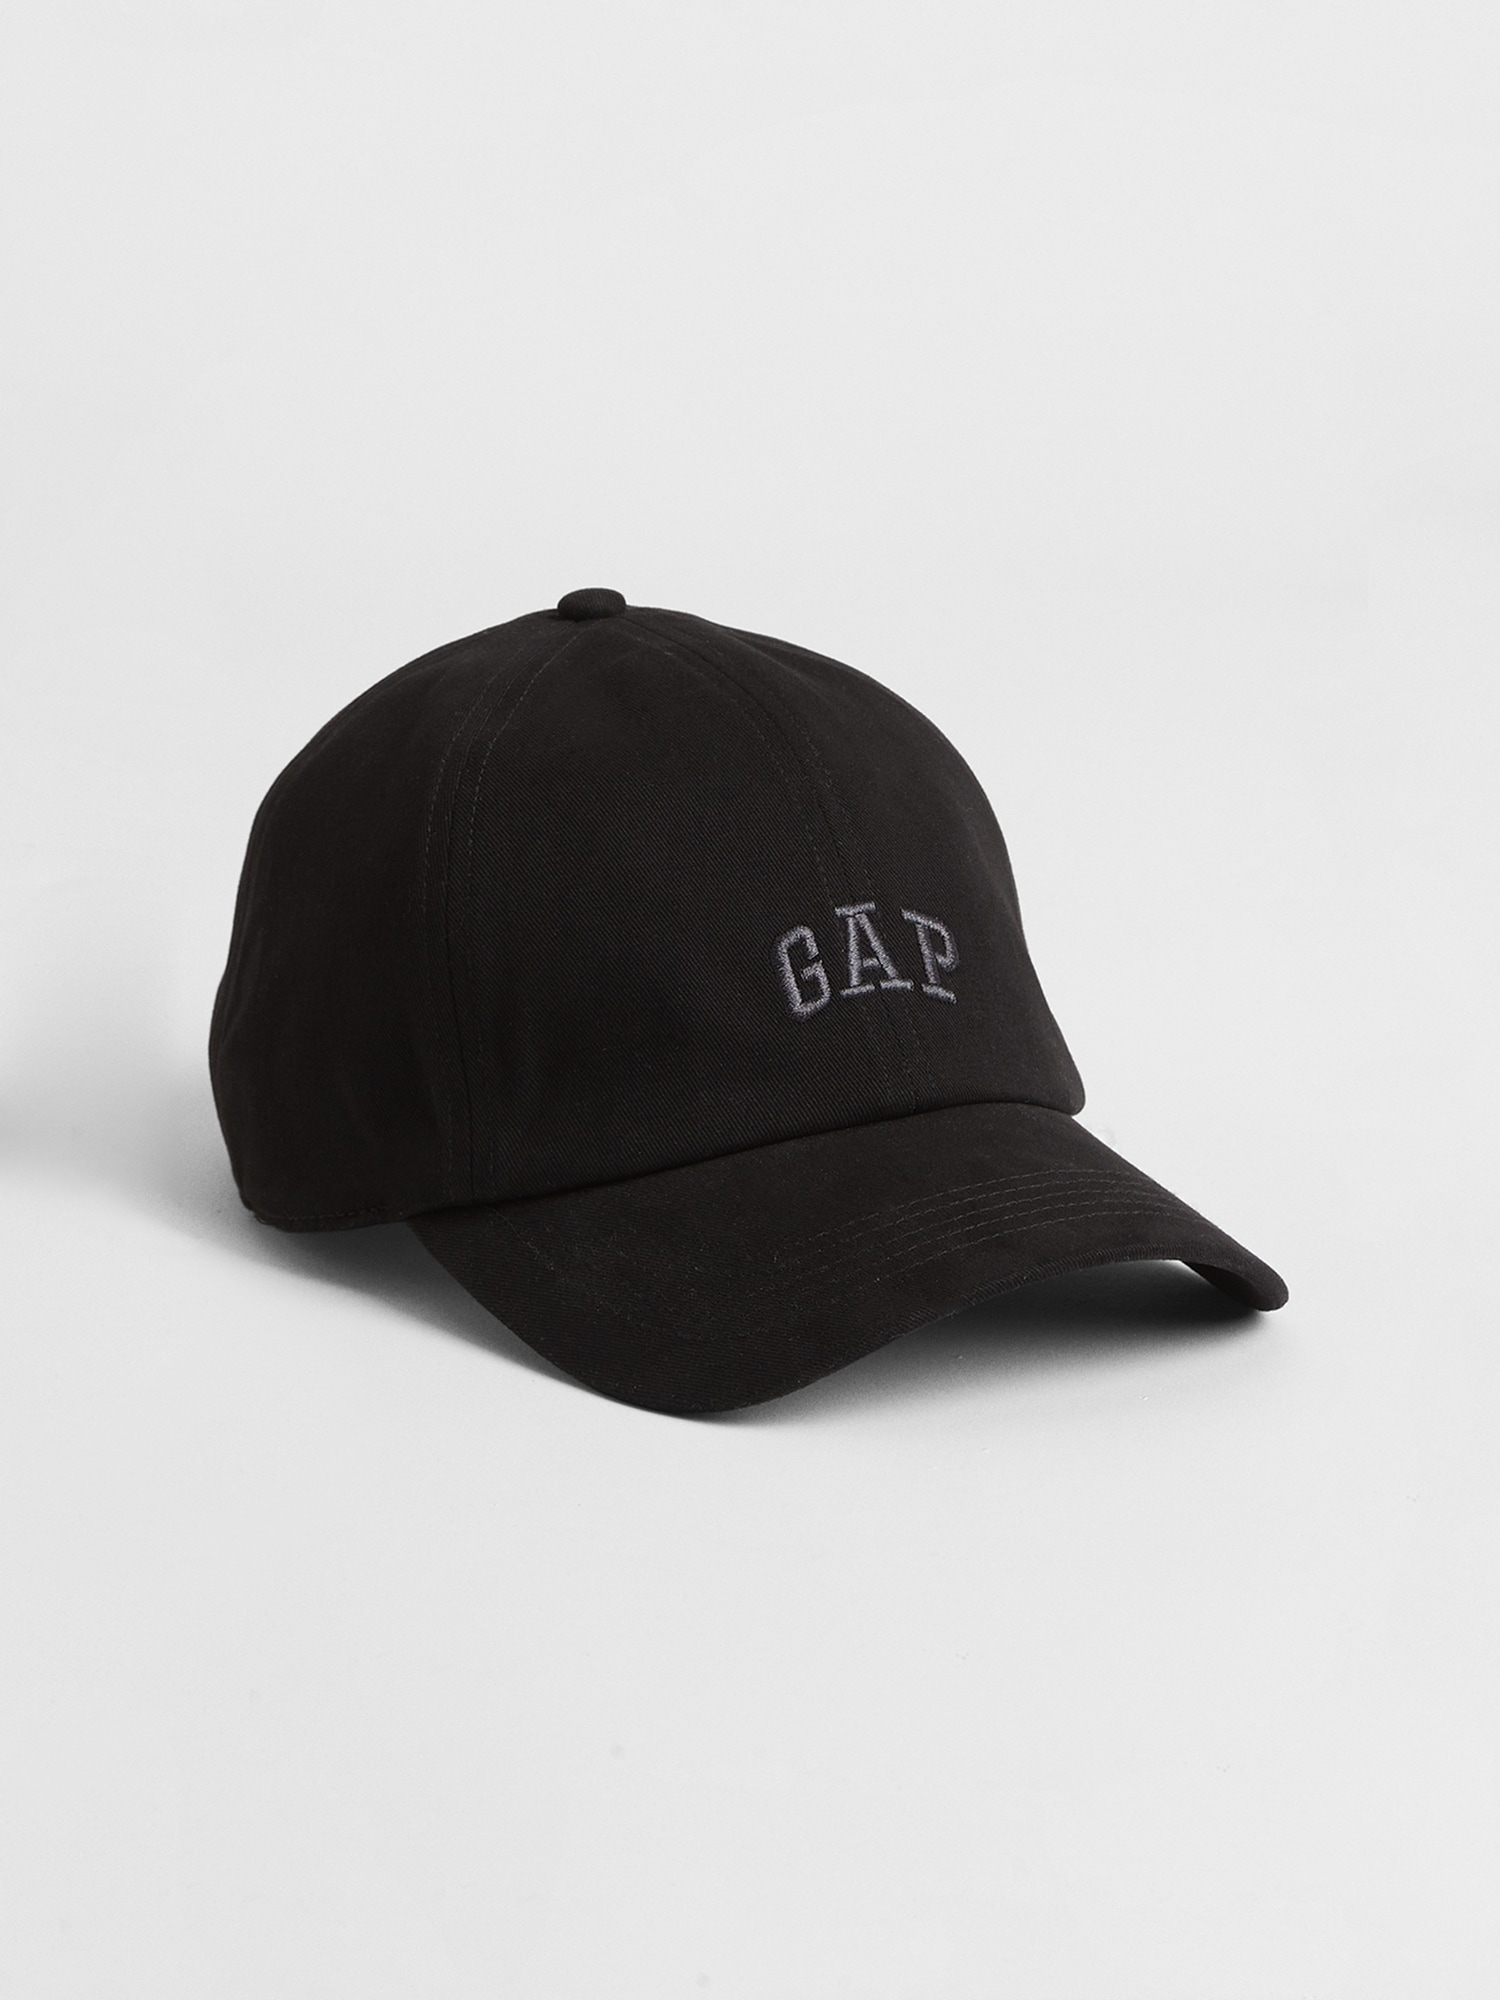 Gap cap to wear with black turtleneck 